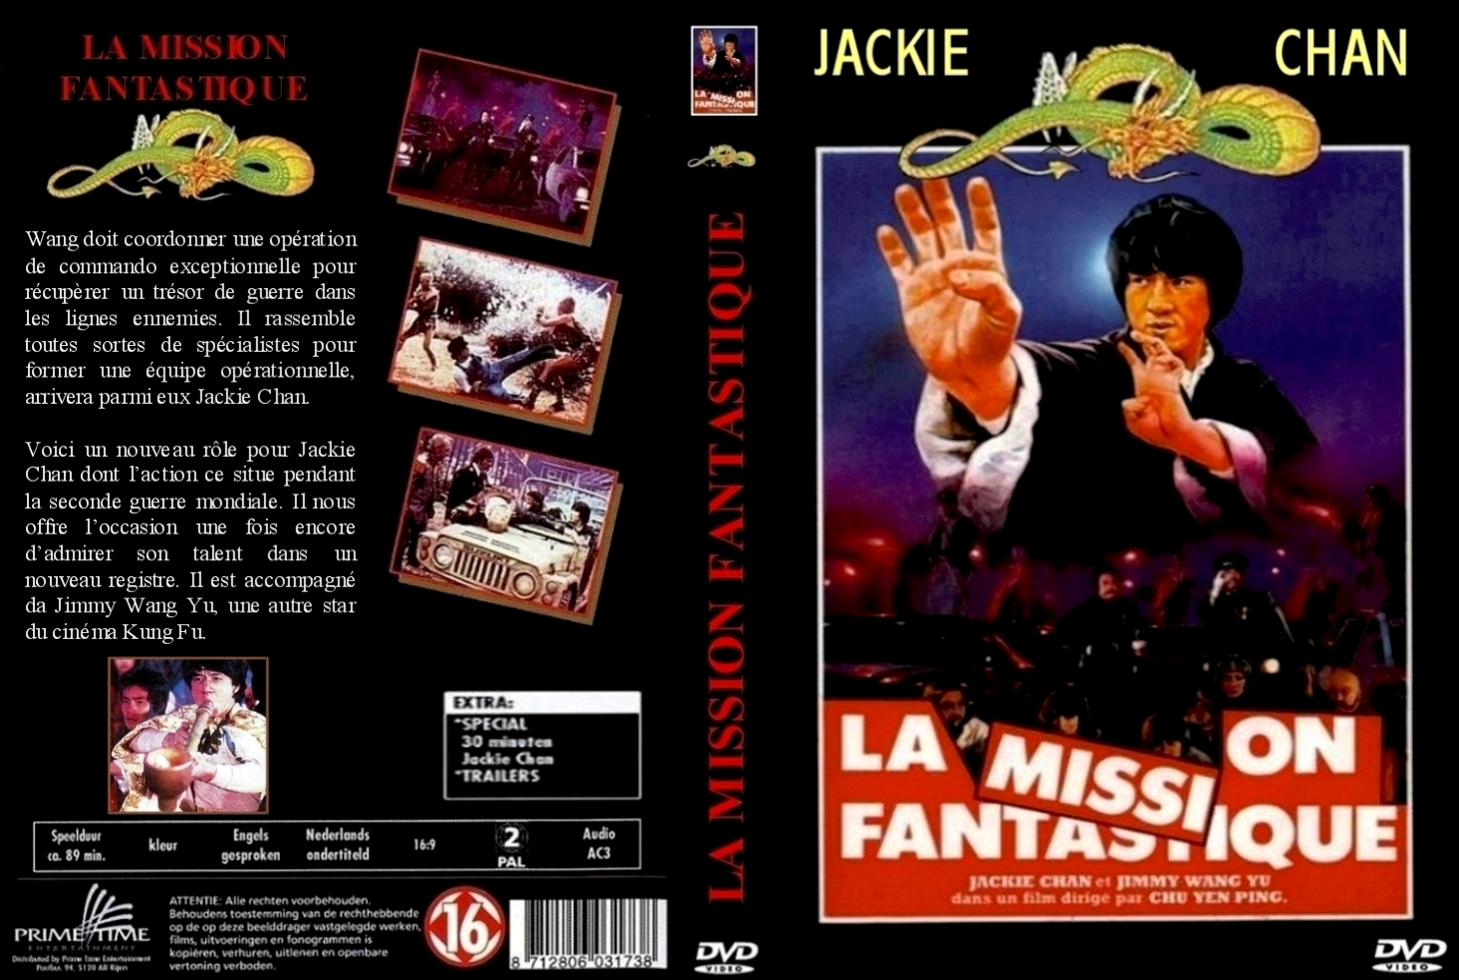 Jaquette DVD La mission fantastique custom